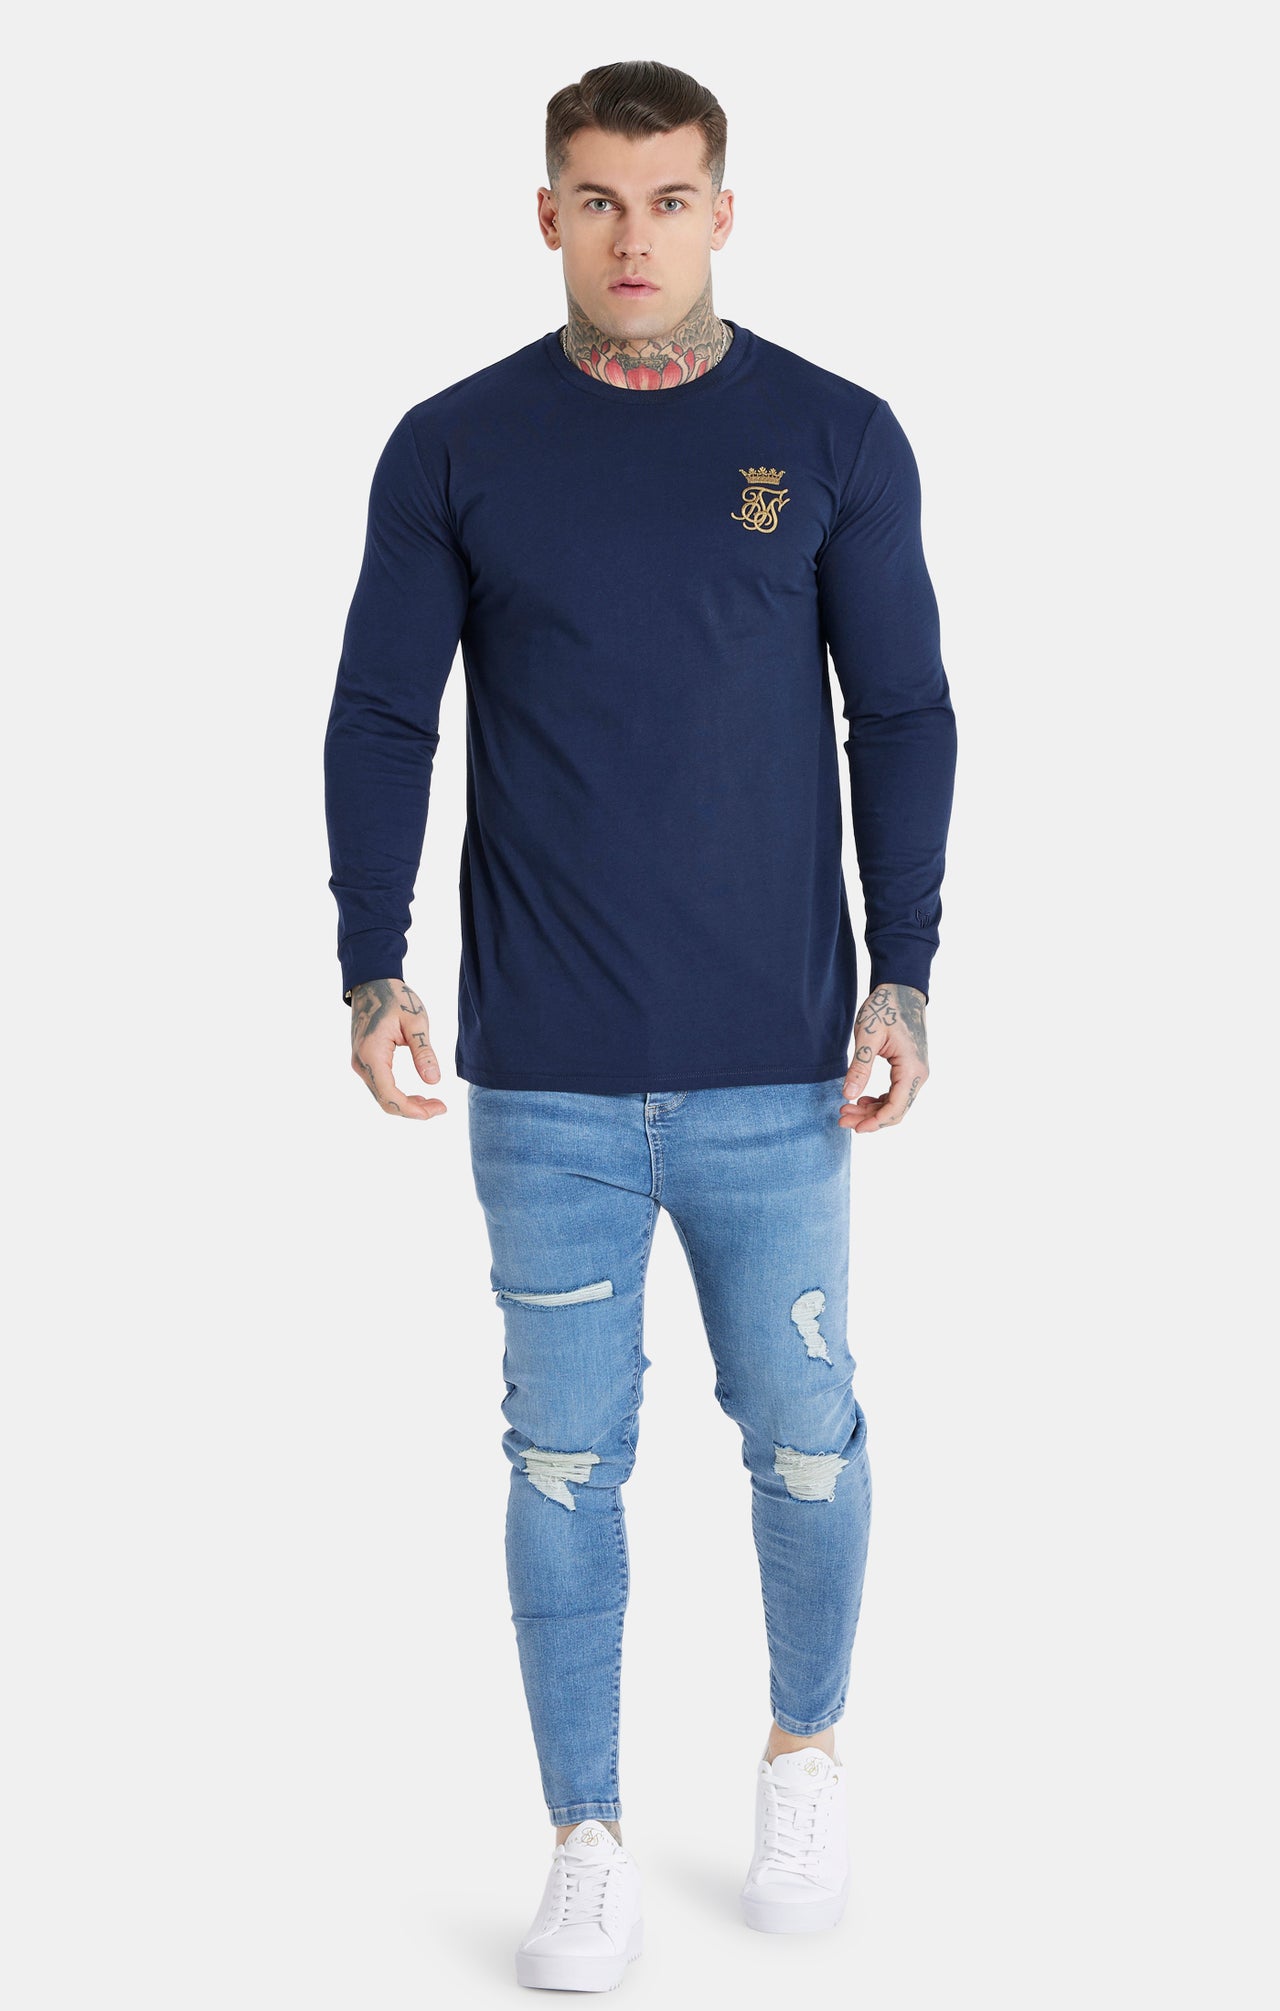 Messi x SikSilk Navy Long Sleeve T-Shirt (1)